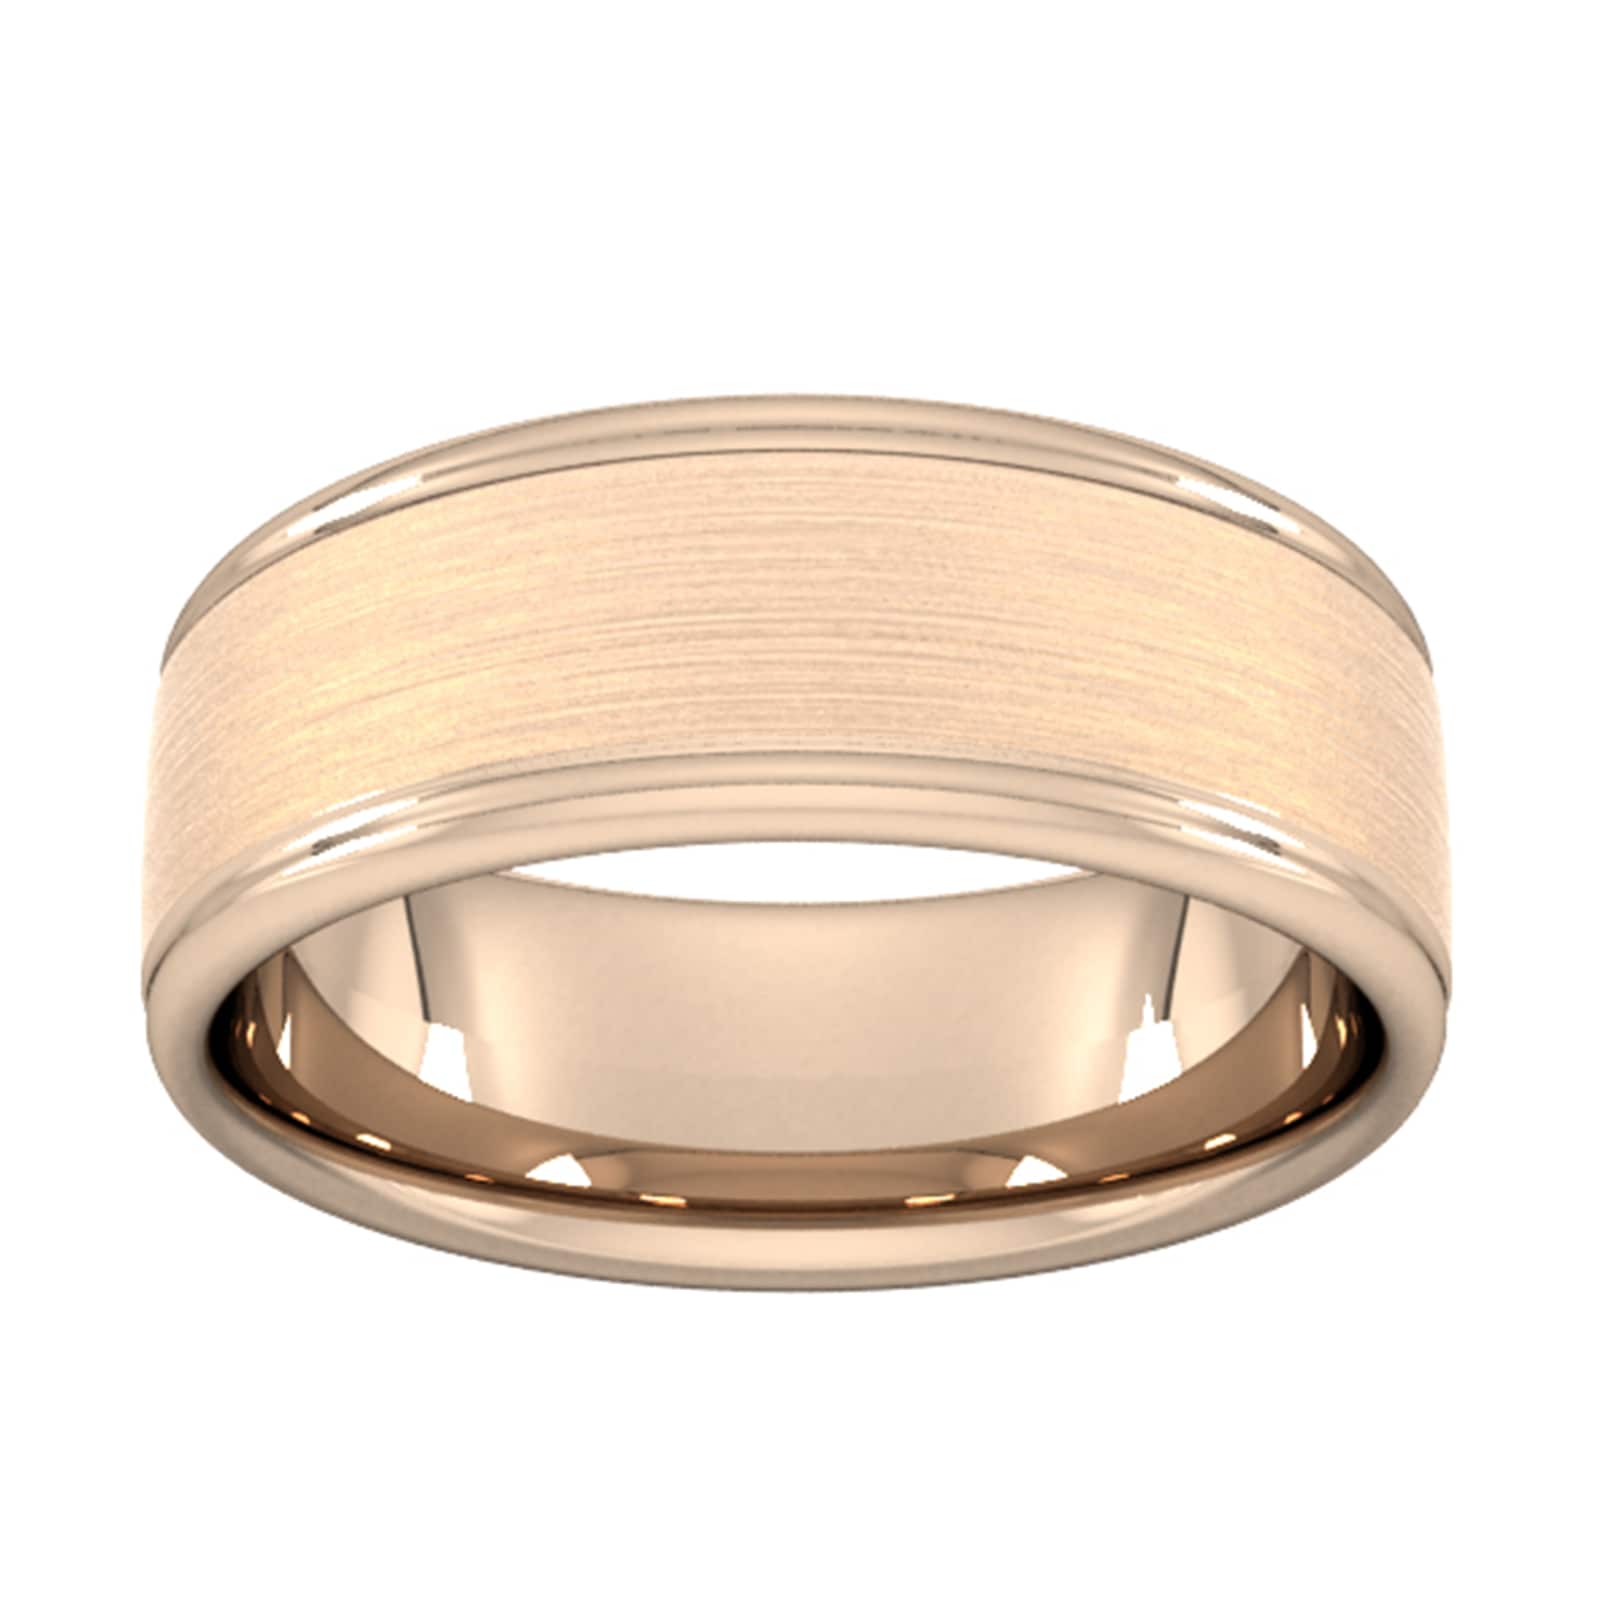 8mm Slight Court Standard Matt Centre With Grooves Wedding Ring In 9 Carat Rose Gold - Ring Size V